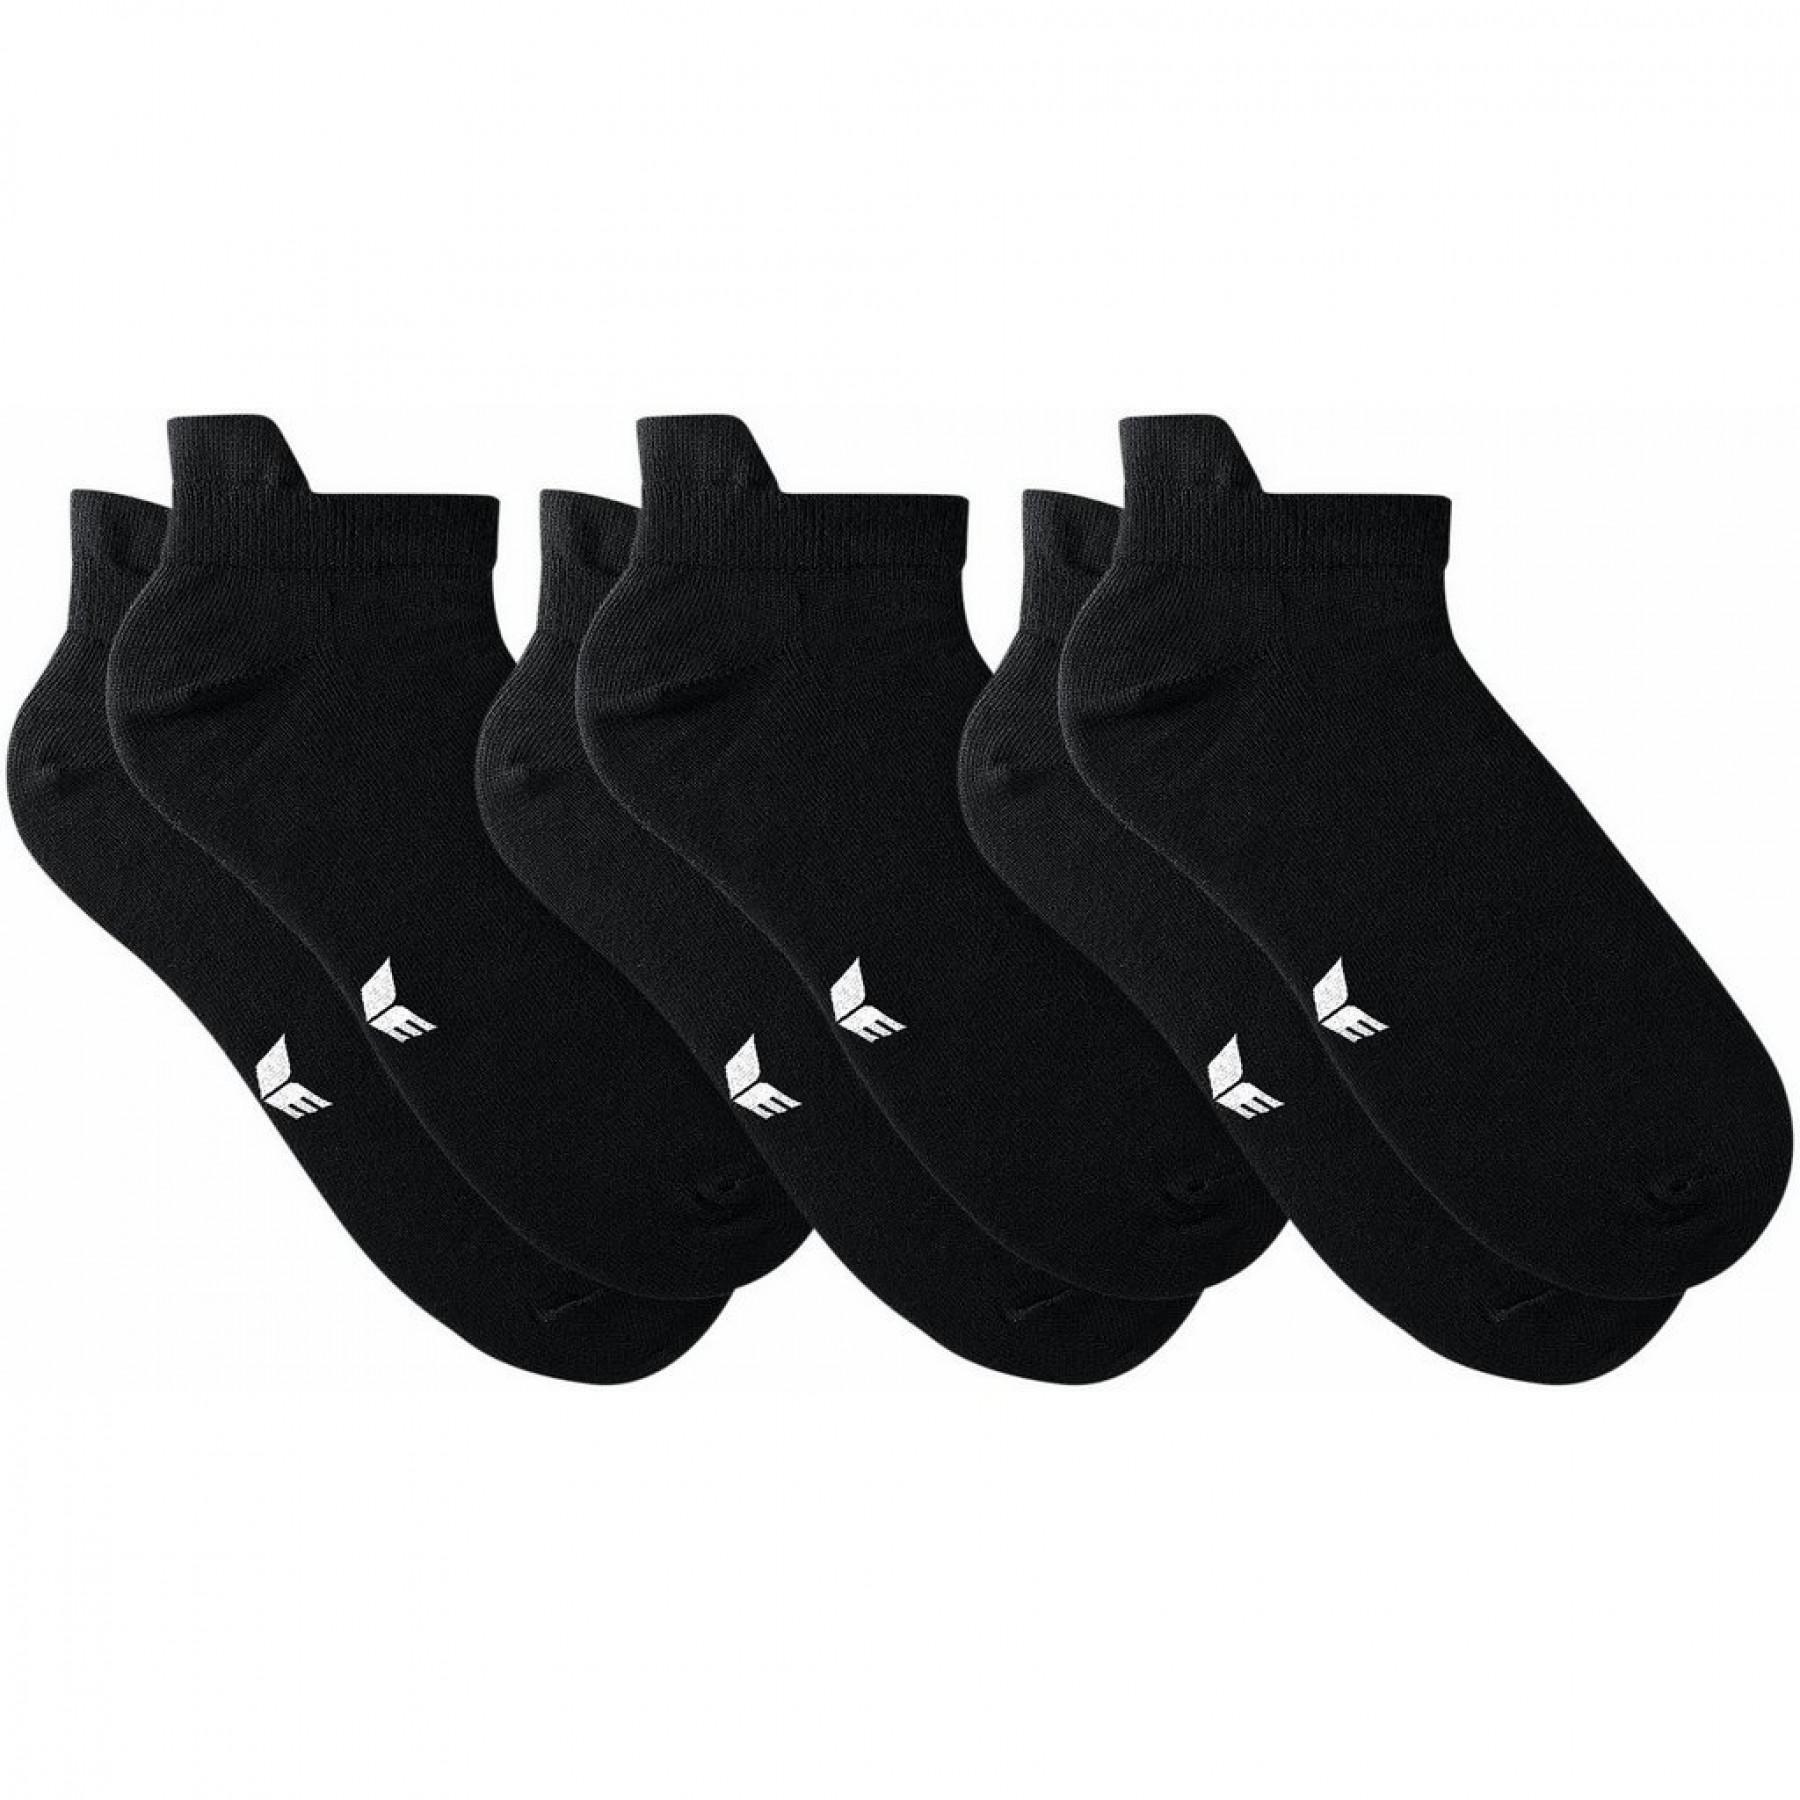 Set of 3 pairs of socks Erima